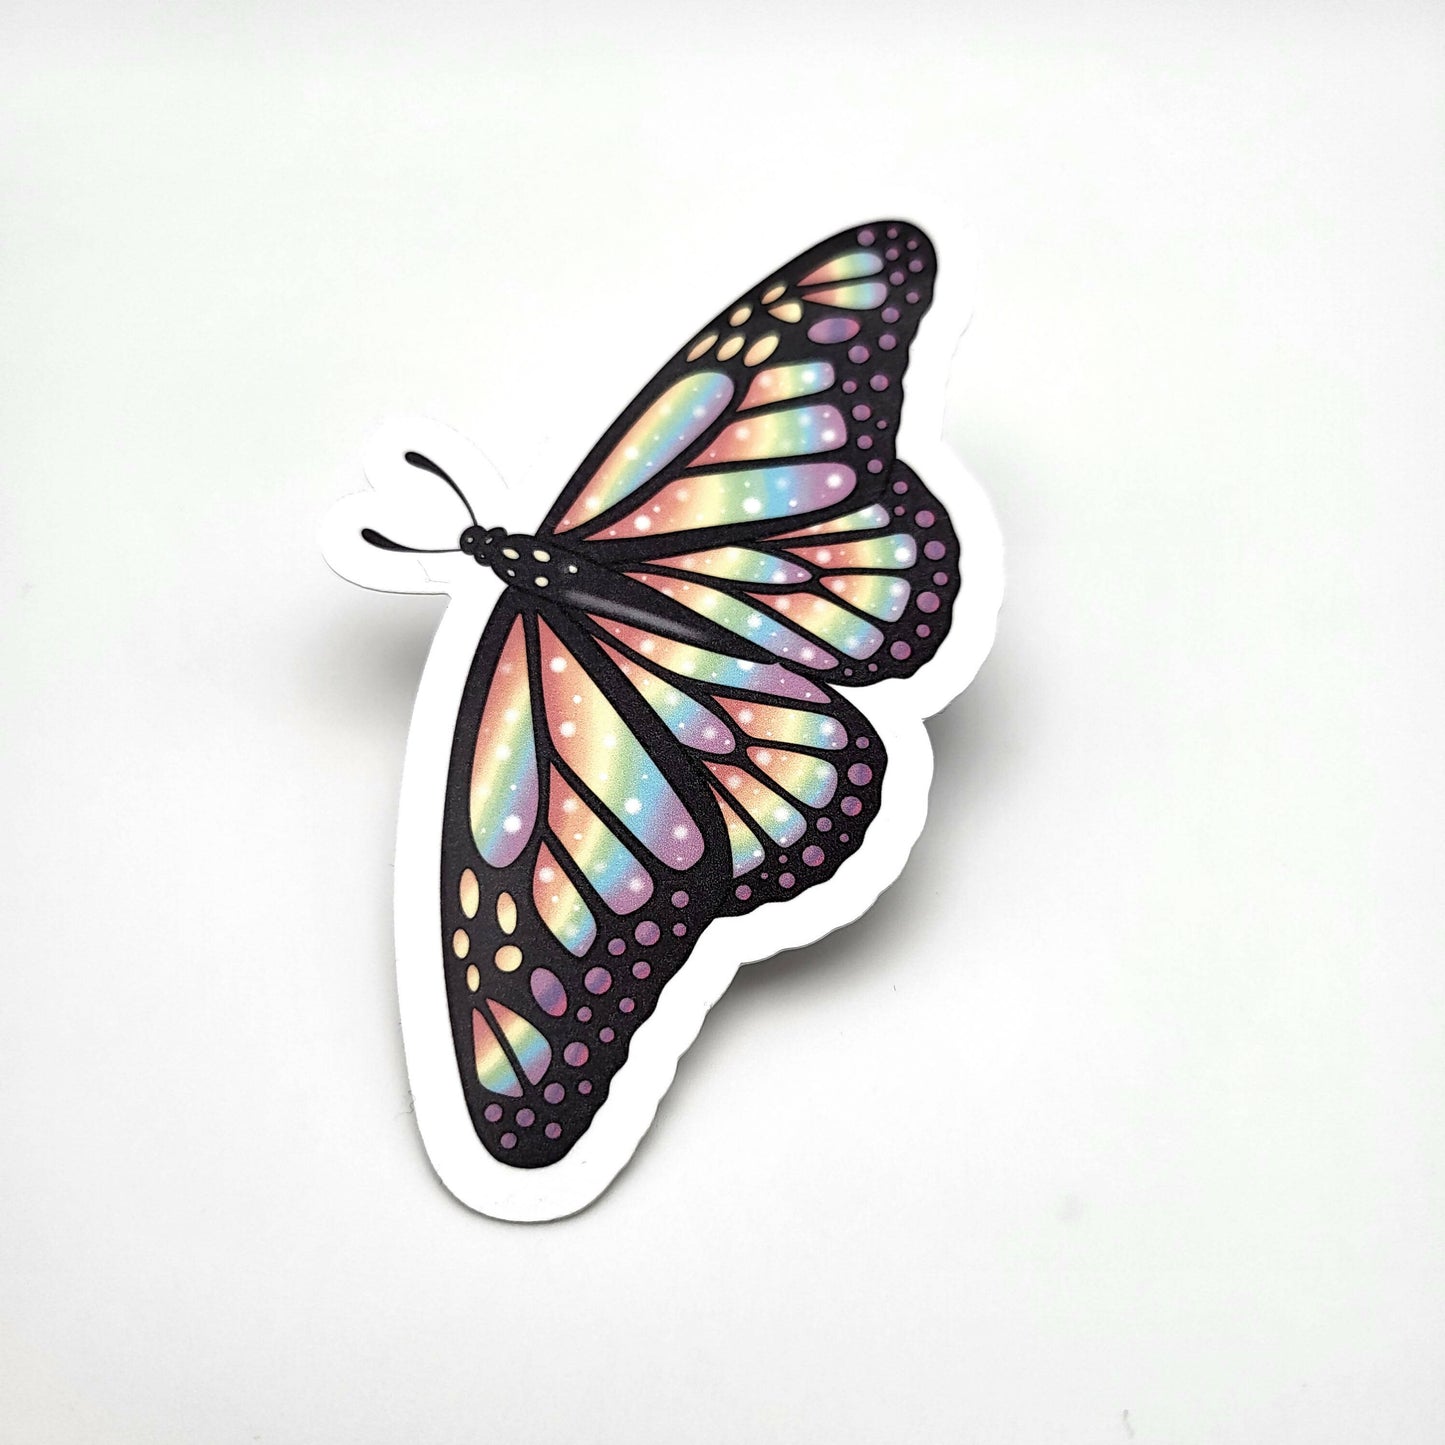 Rainbow Butterfly sticker